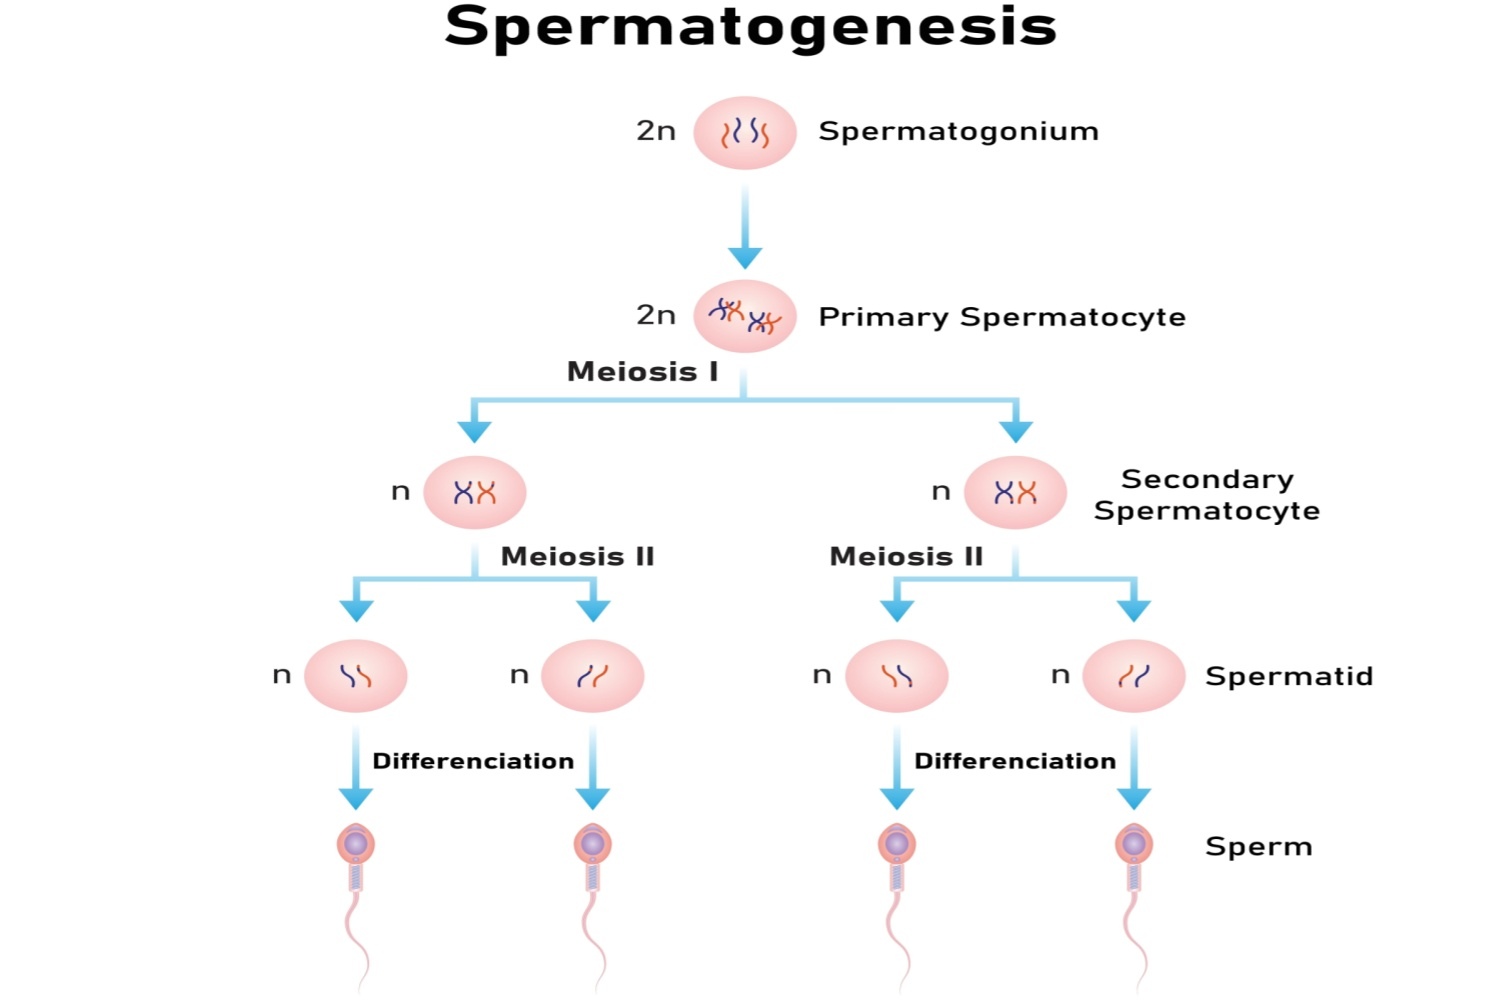 Spermatogenesis stages